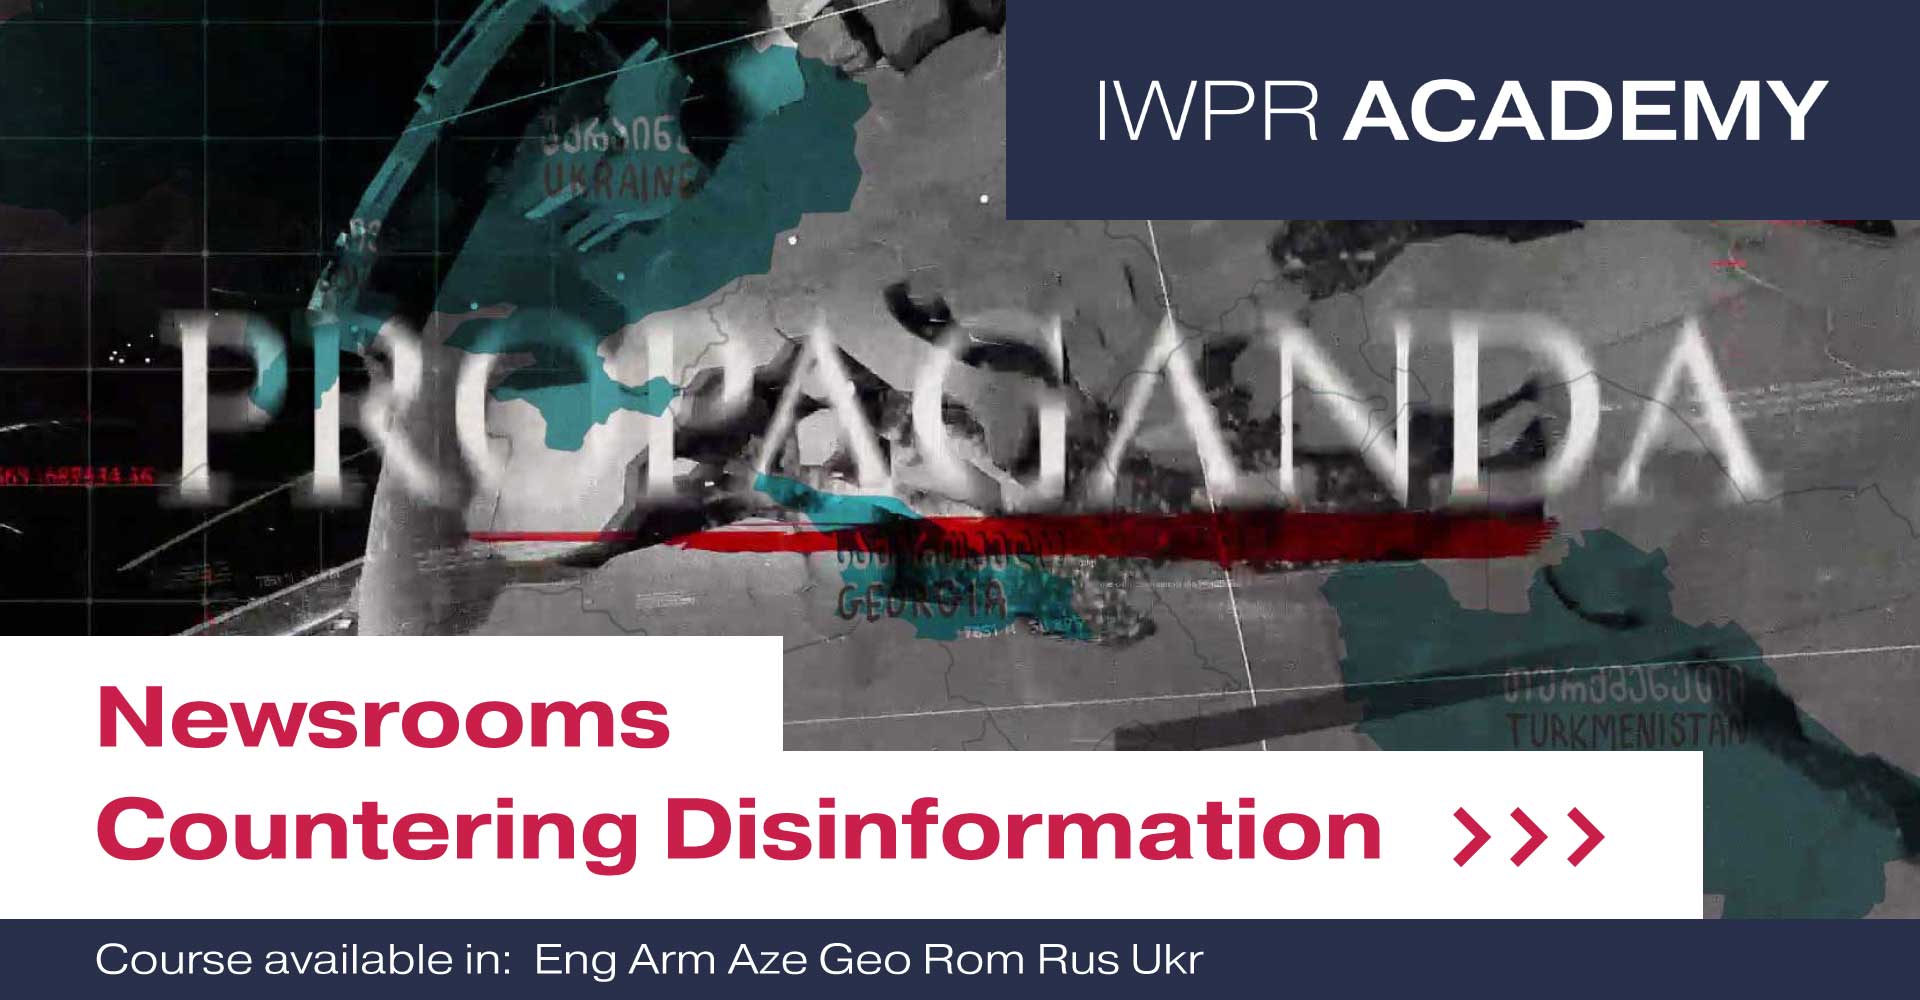 IWPR-Academy-Newsrooms-Countering-Disinformation